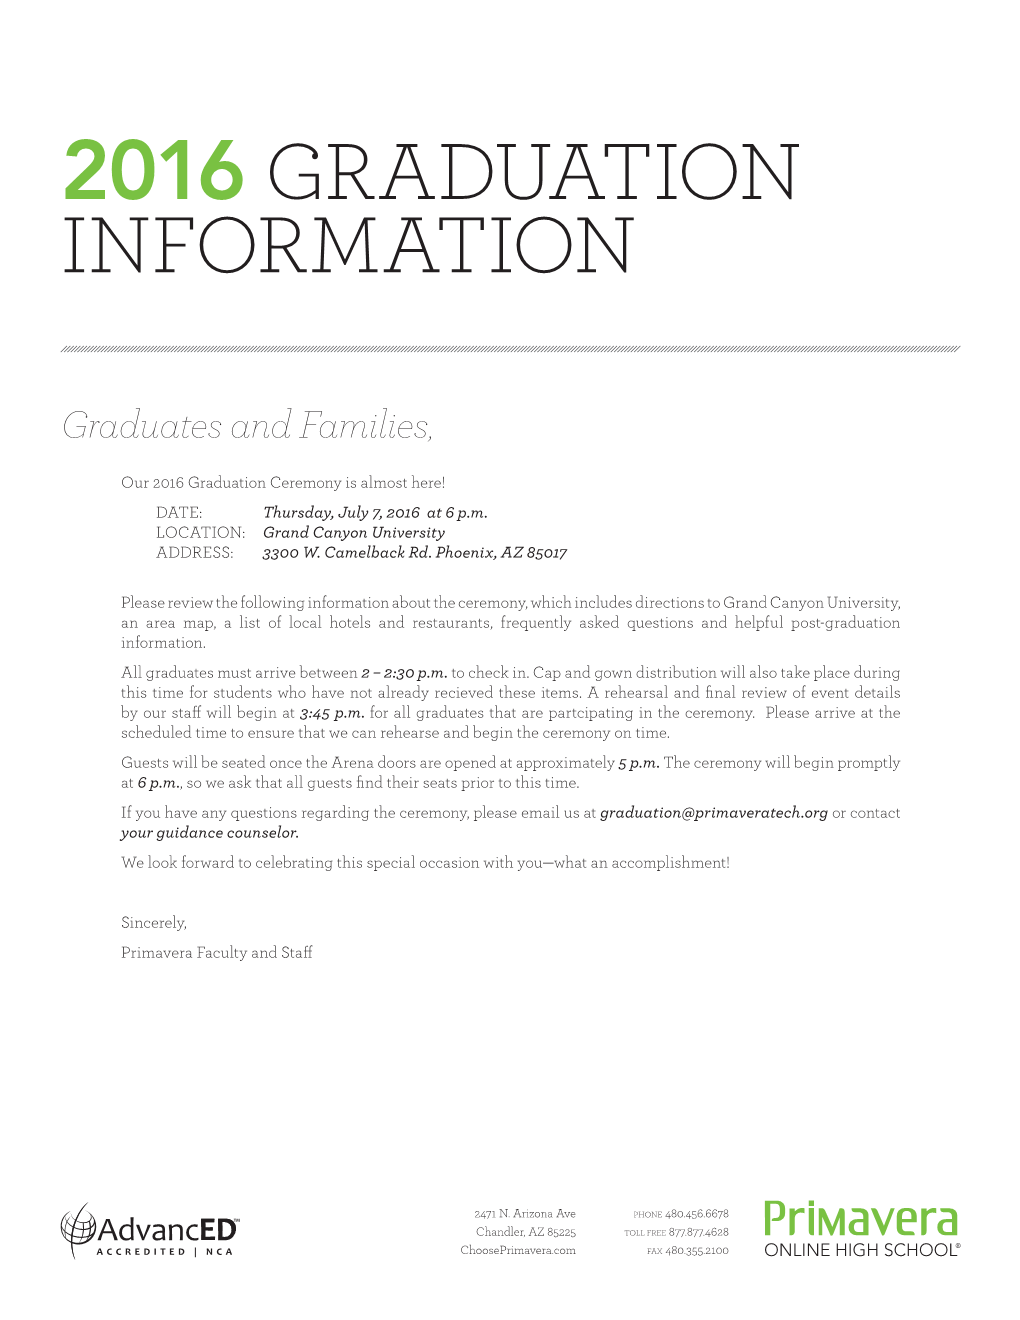 2016 Graduation Information